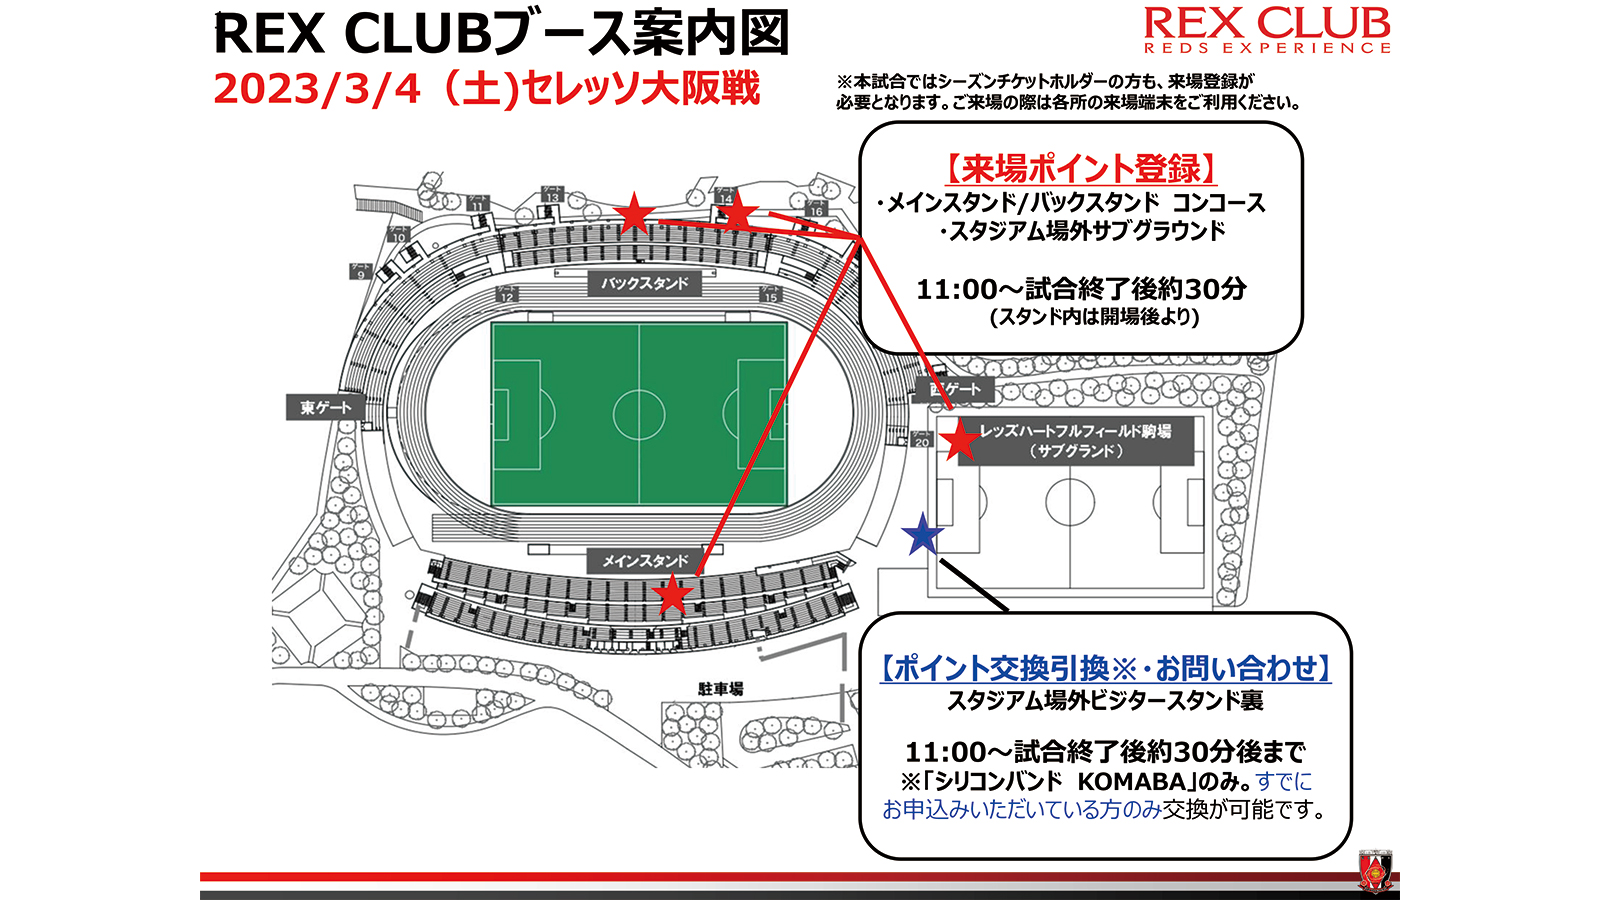 REX CLUB】3/4(土) C大阪戦 来場ポイント登録および、REX CLUBの